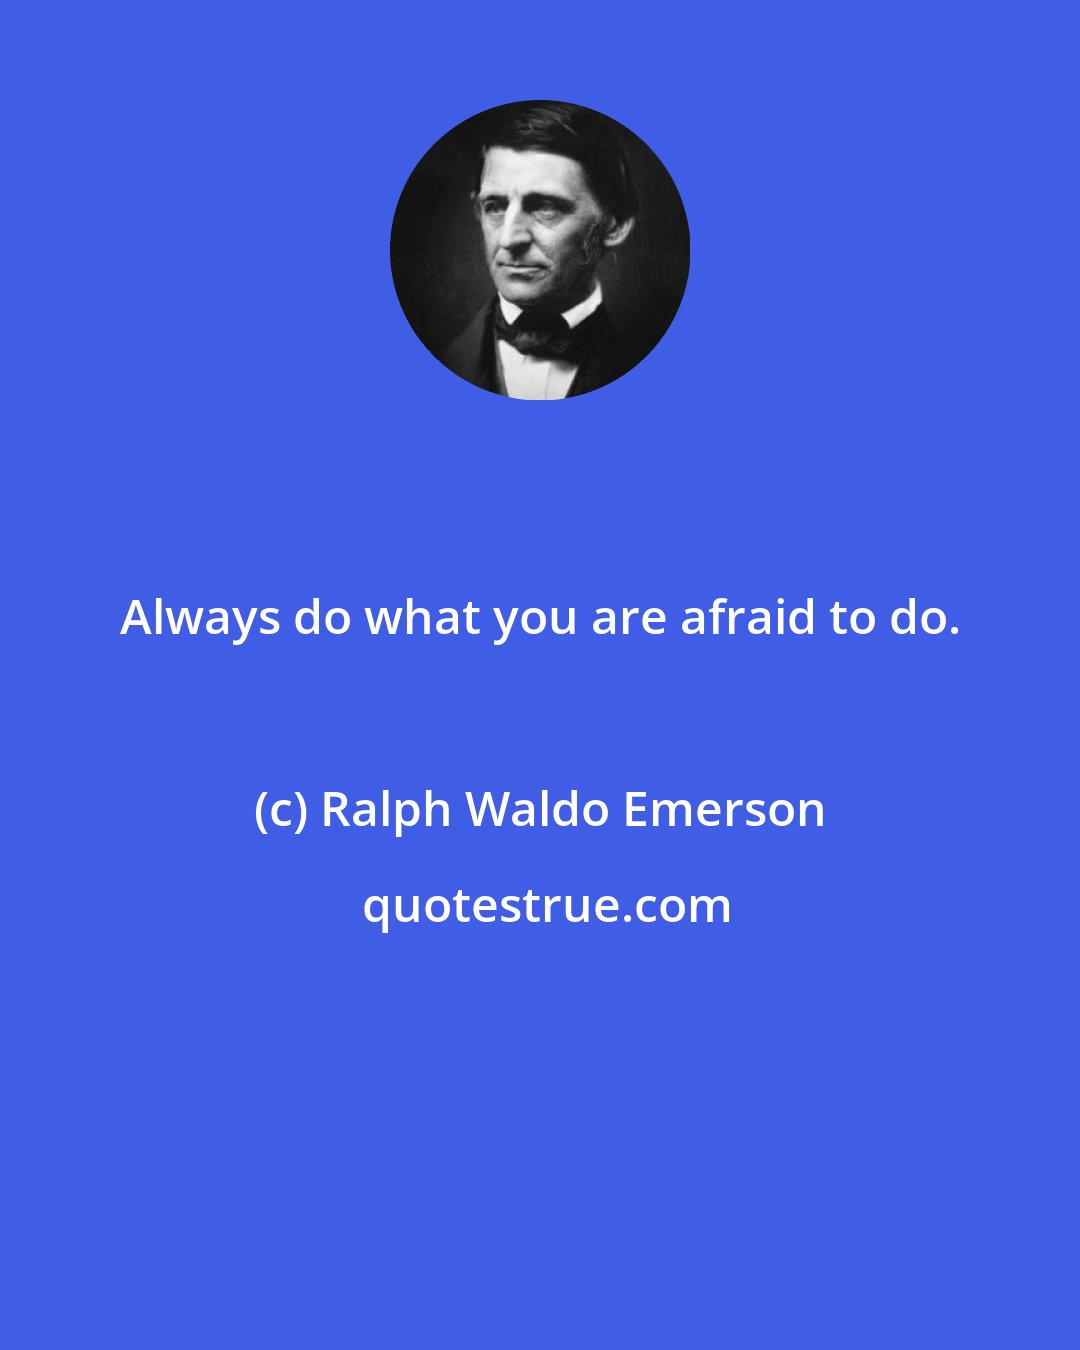 Ralph Waldo Emerson: Always do what you are afraid to do.